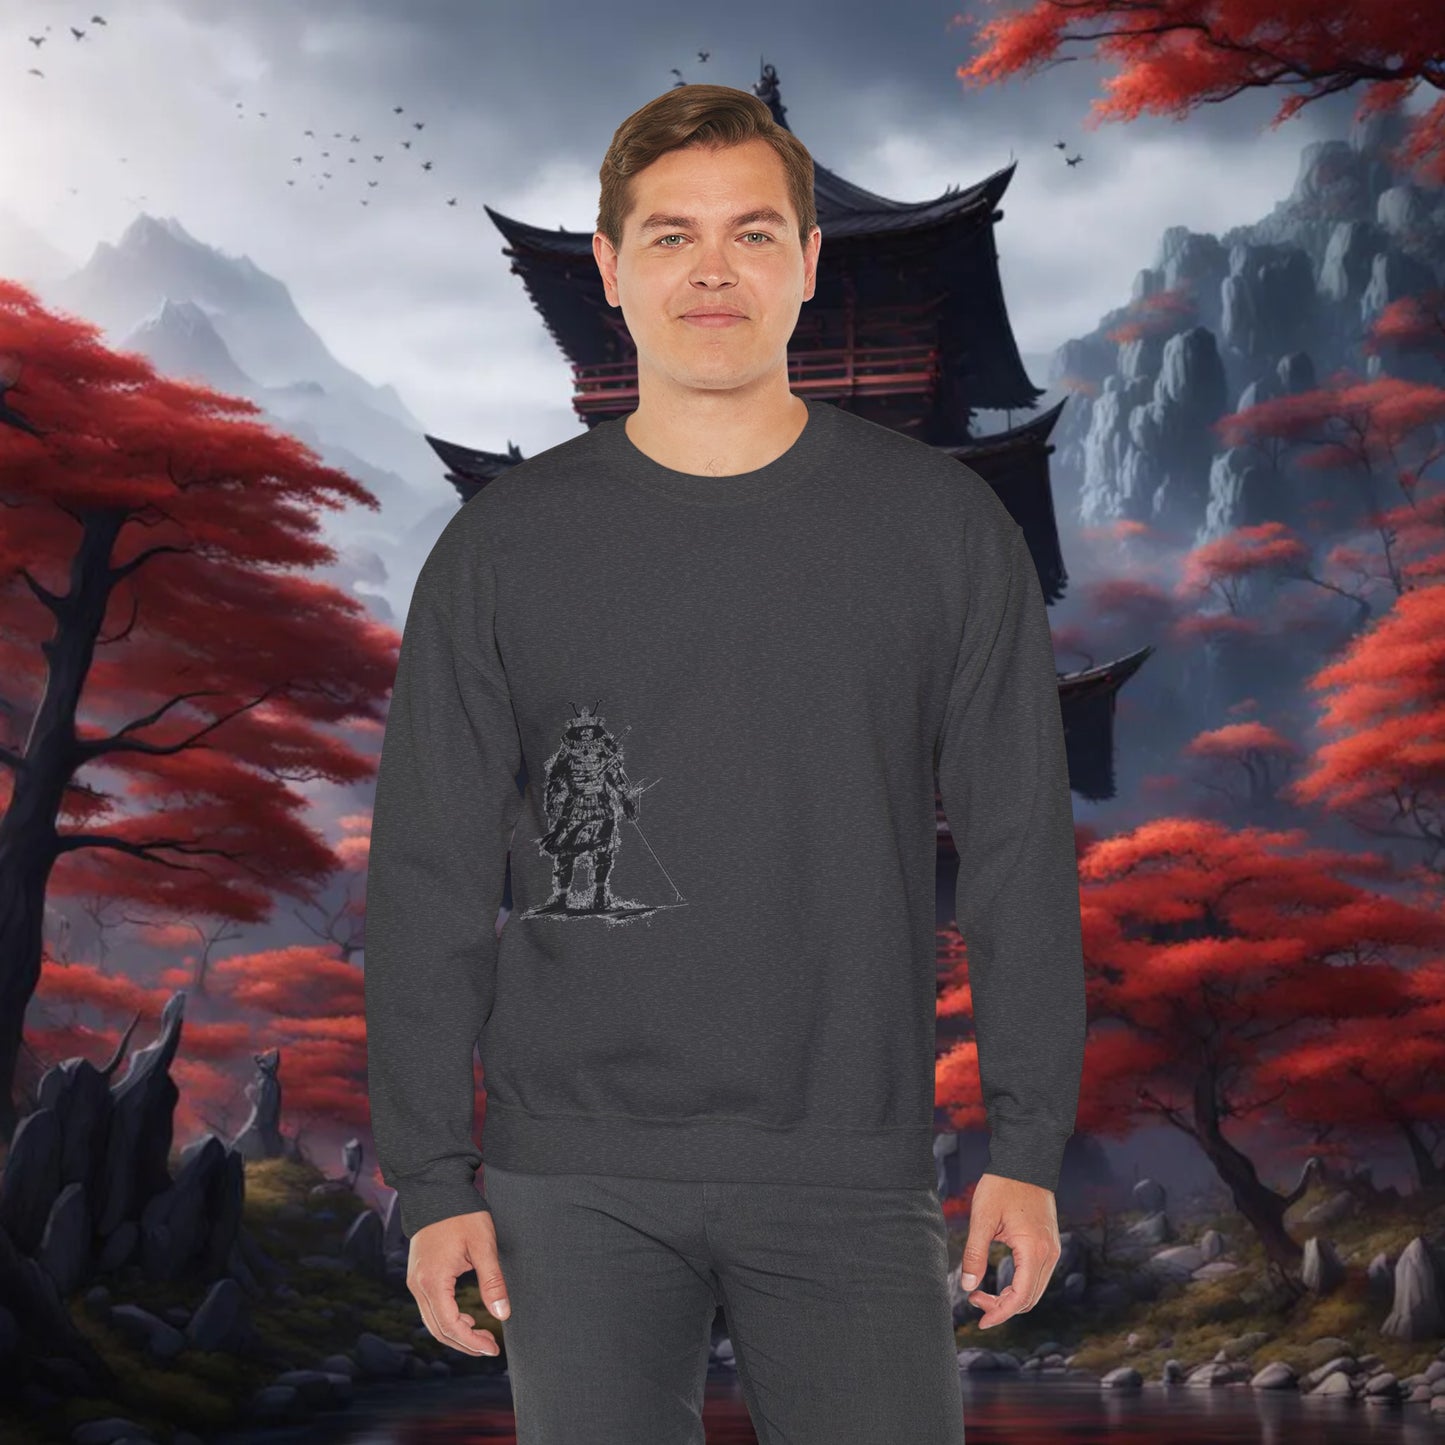 Samurai 1 - Unisex Sweatshirt